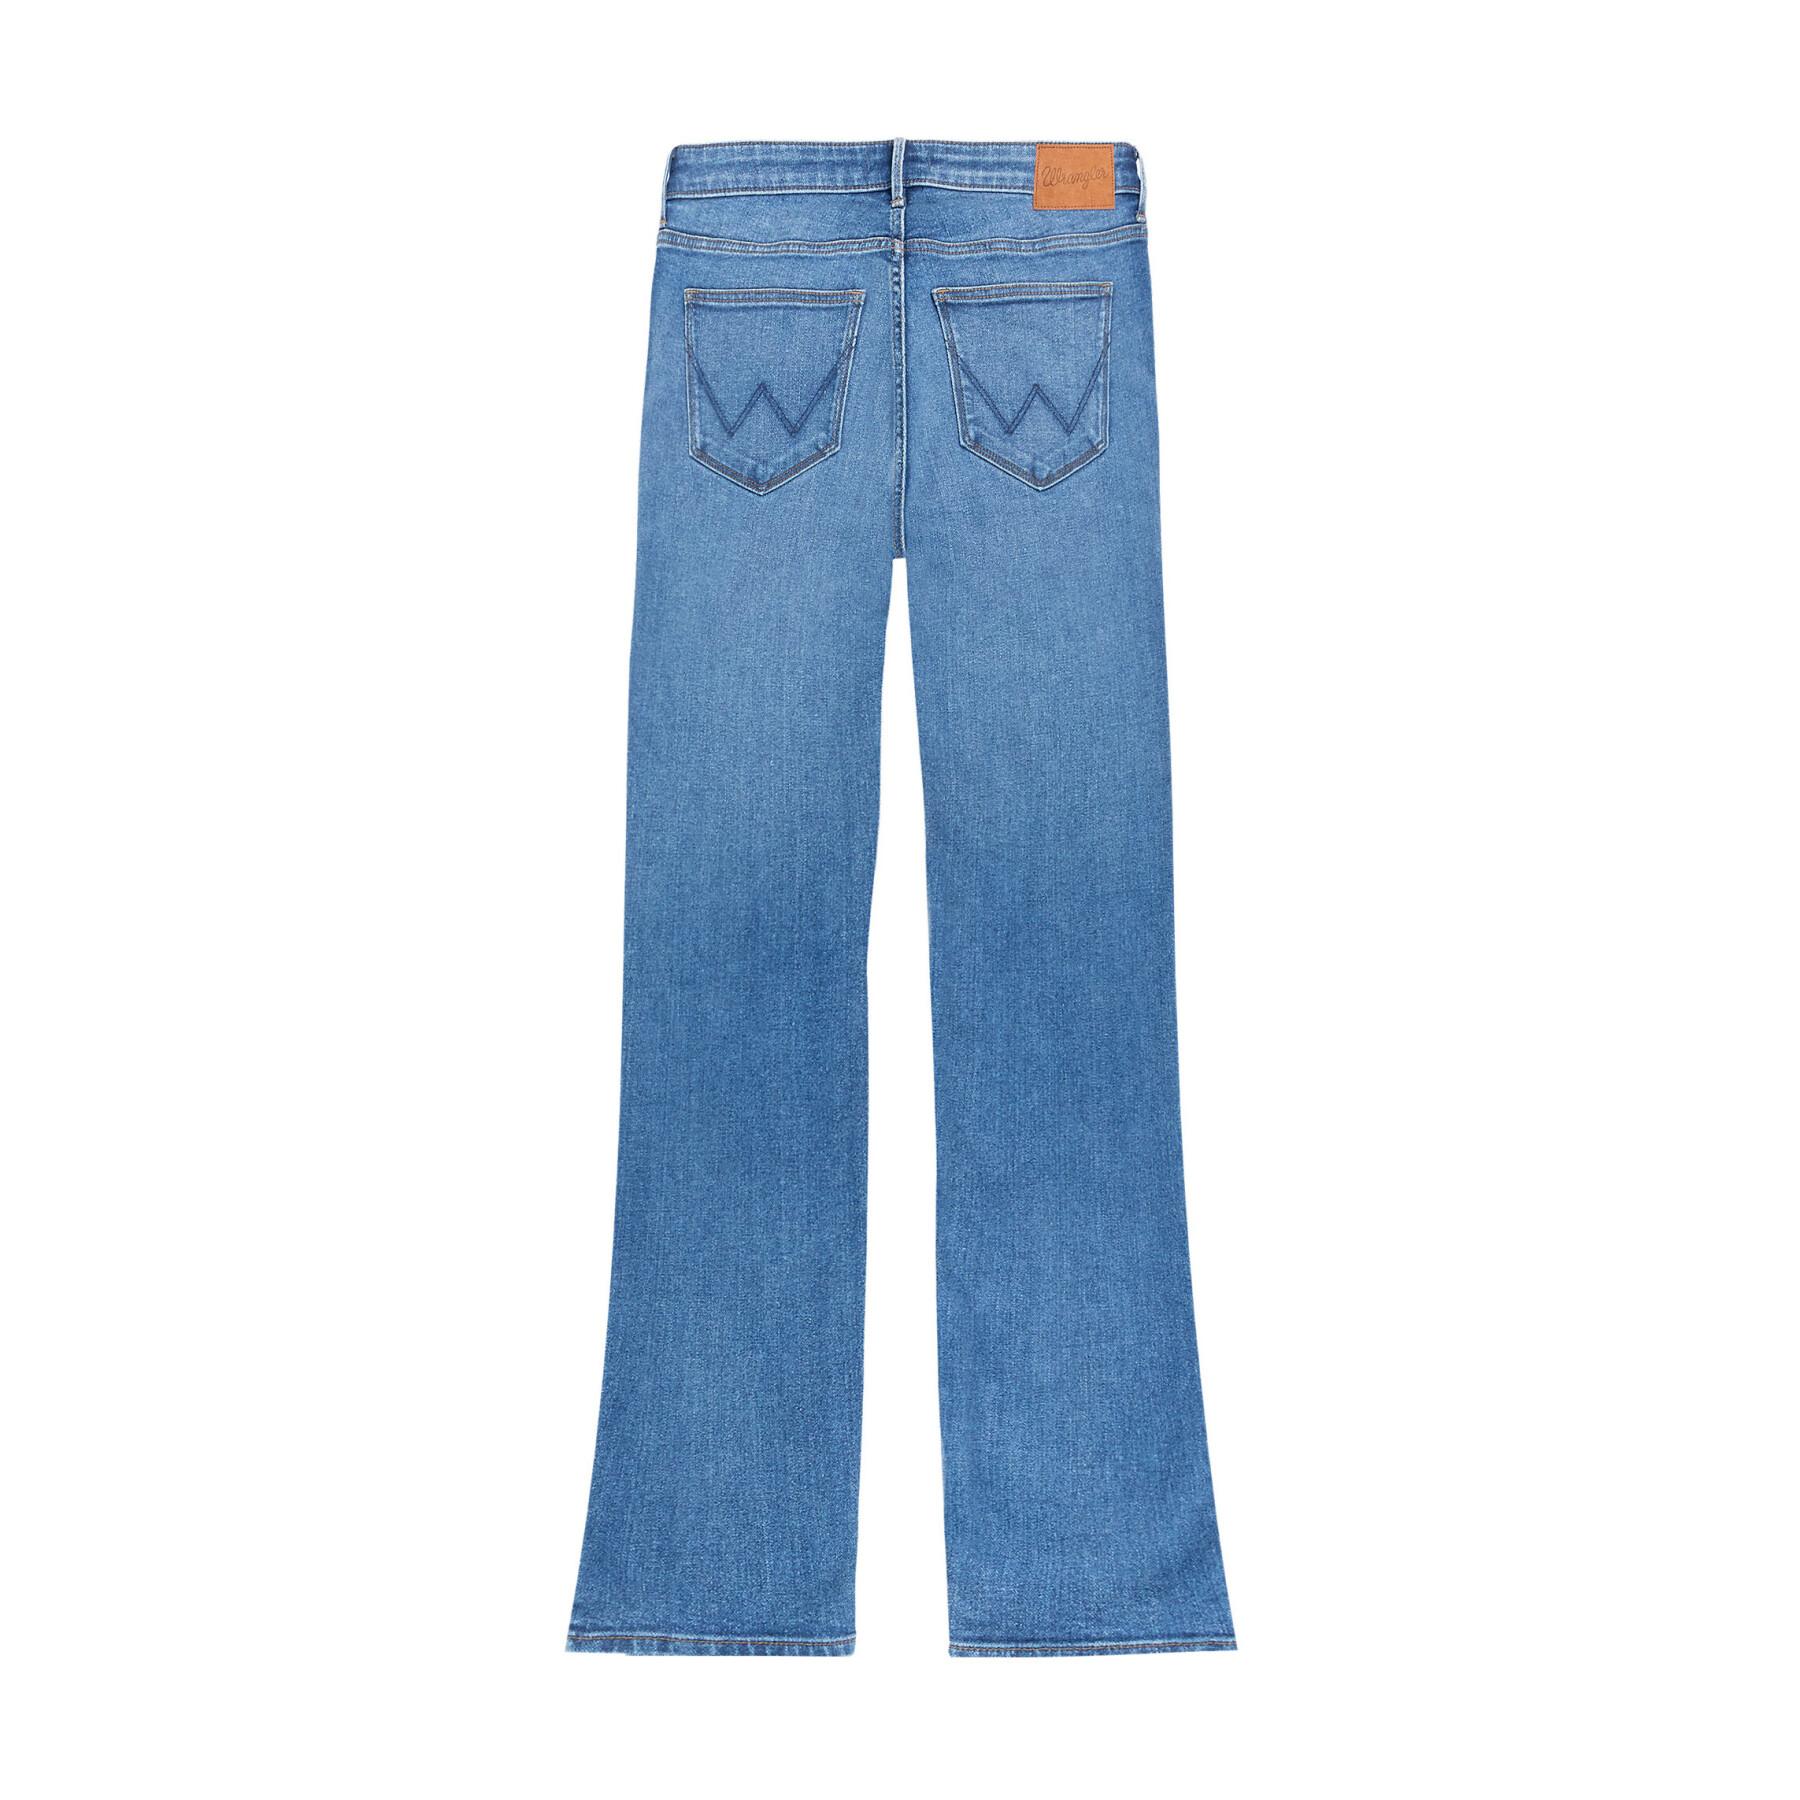 Jeans donna Wrangler Bootcut